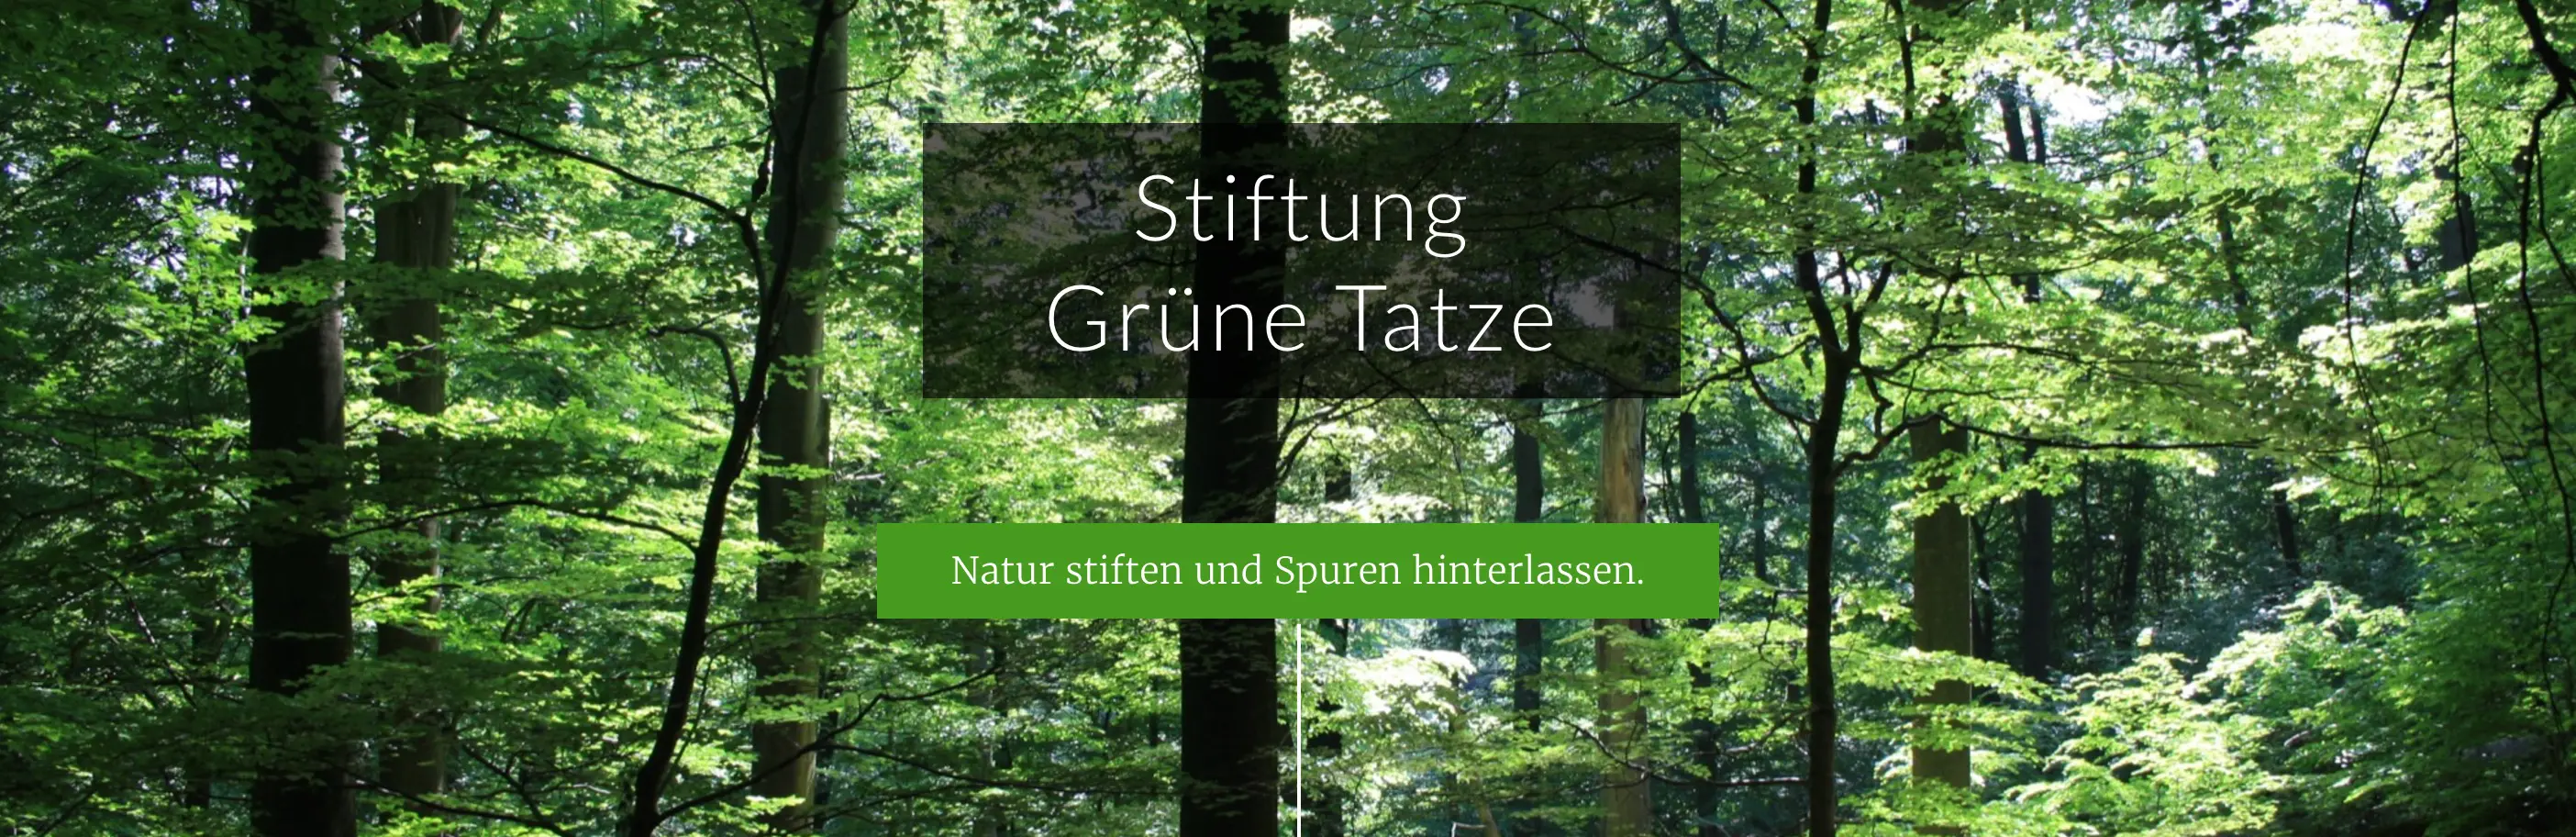 Stiftung Grüne Tatze